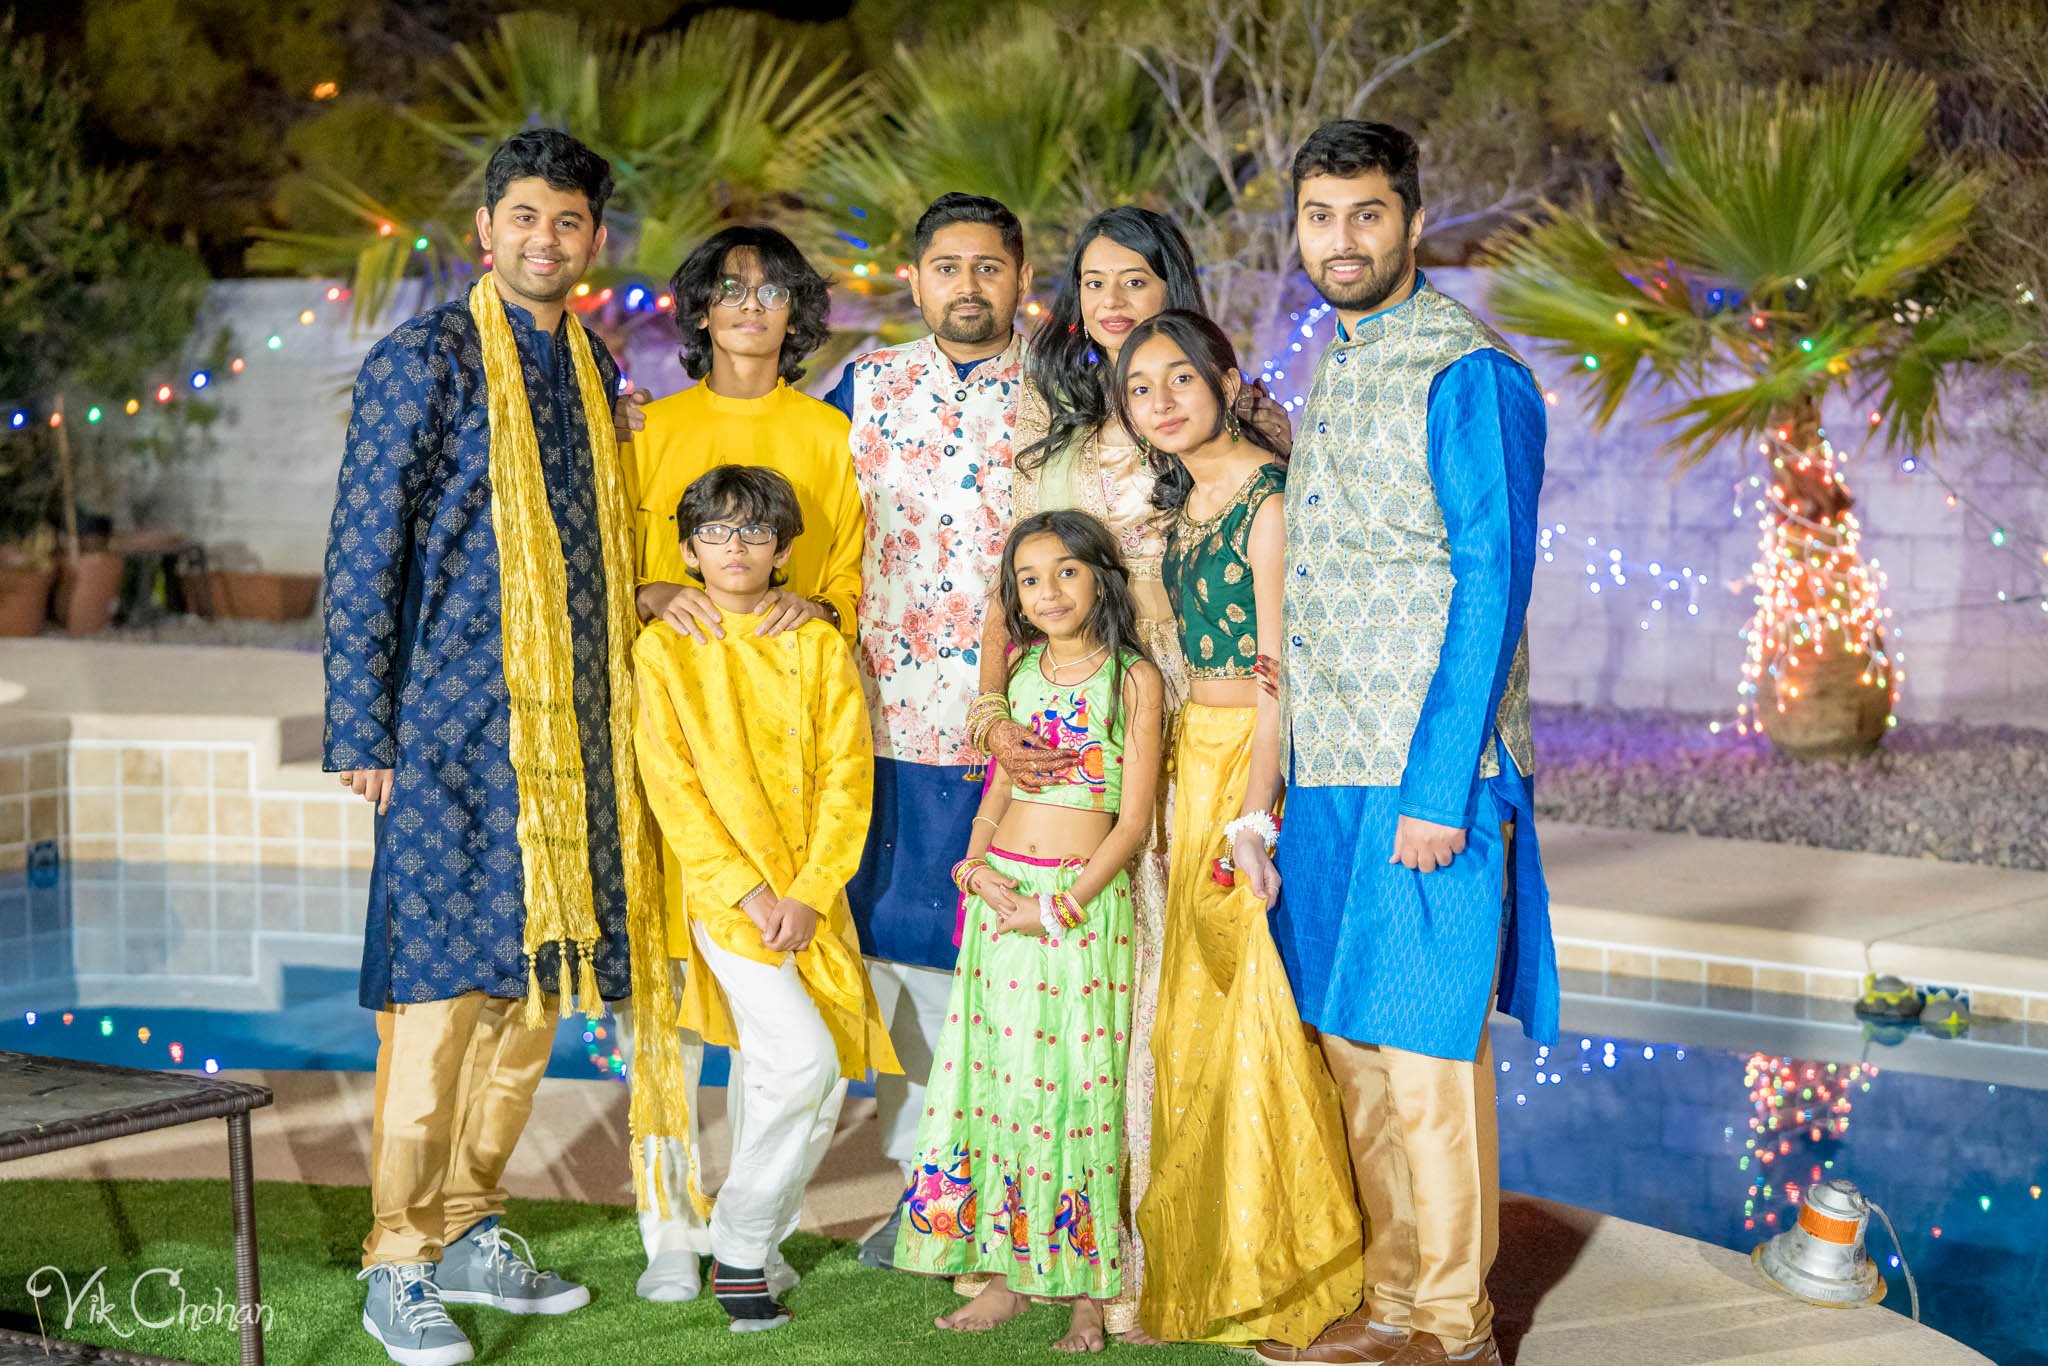 2022-02-04-Hely-&-Parth-Garba-Night-Indian-Wedding-Vik-Chohan-Photography-Photo-Booth-Social-Media-VCP-147.jpg